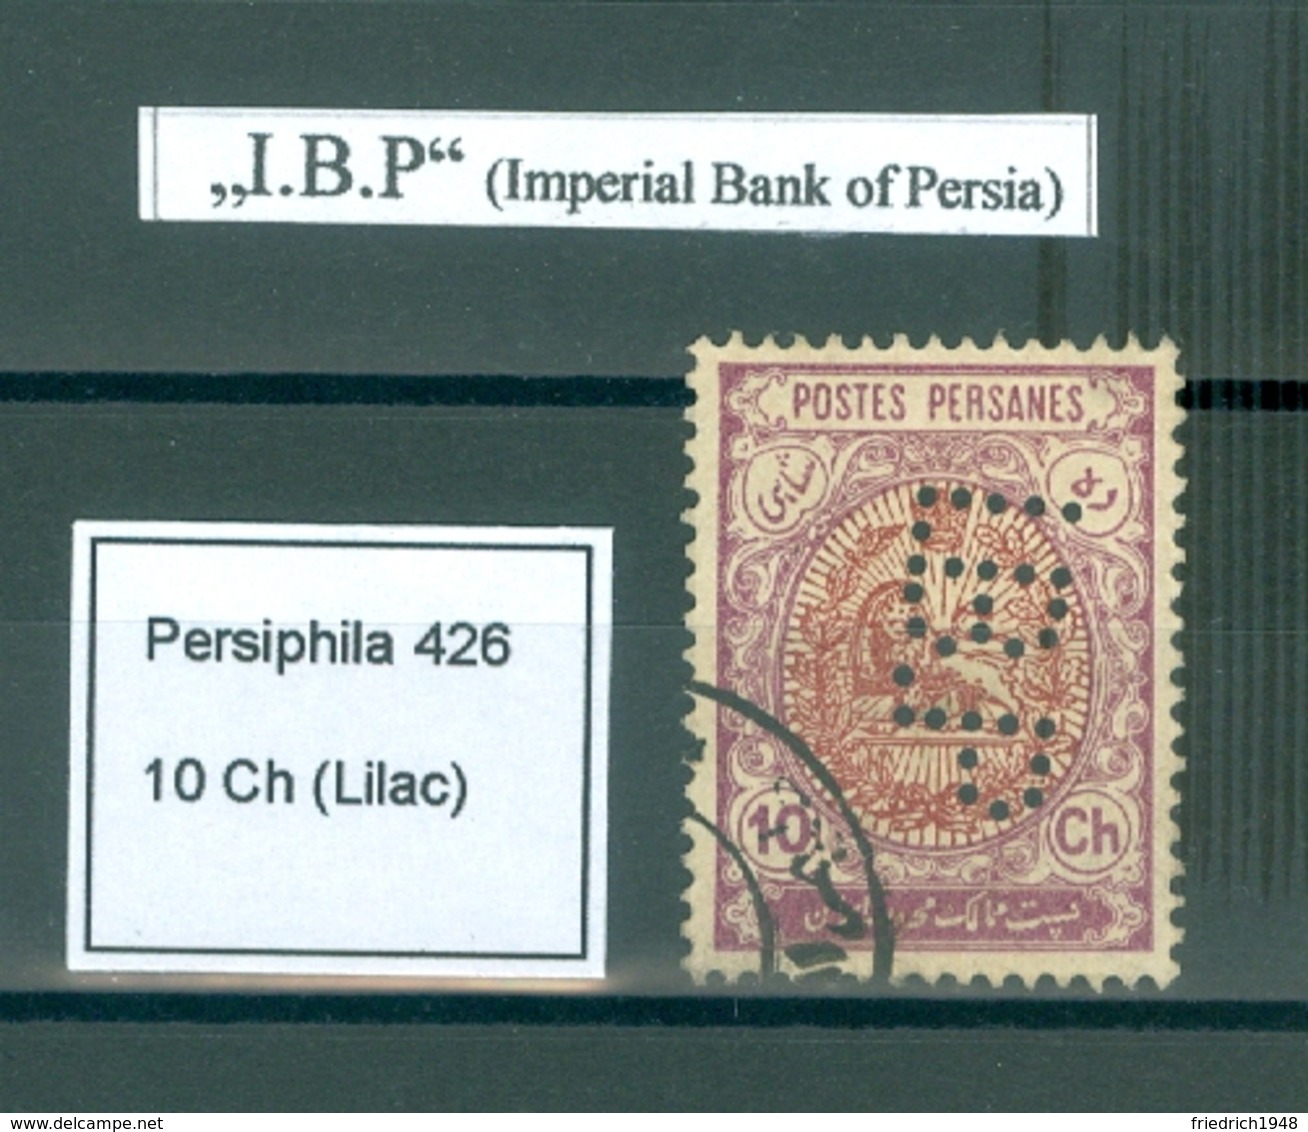 PERSIA - IRAN; Perfin " I B P "  (Imperial Bank Of Persia)  10 Chahis - Iran